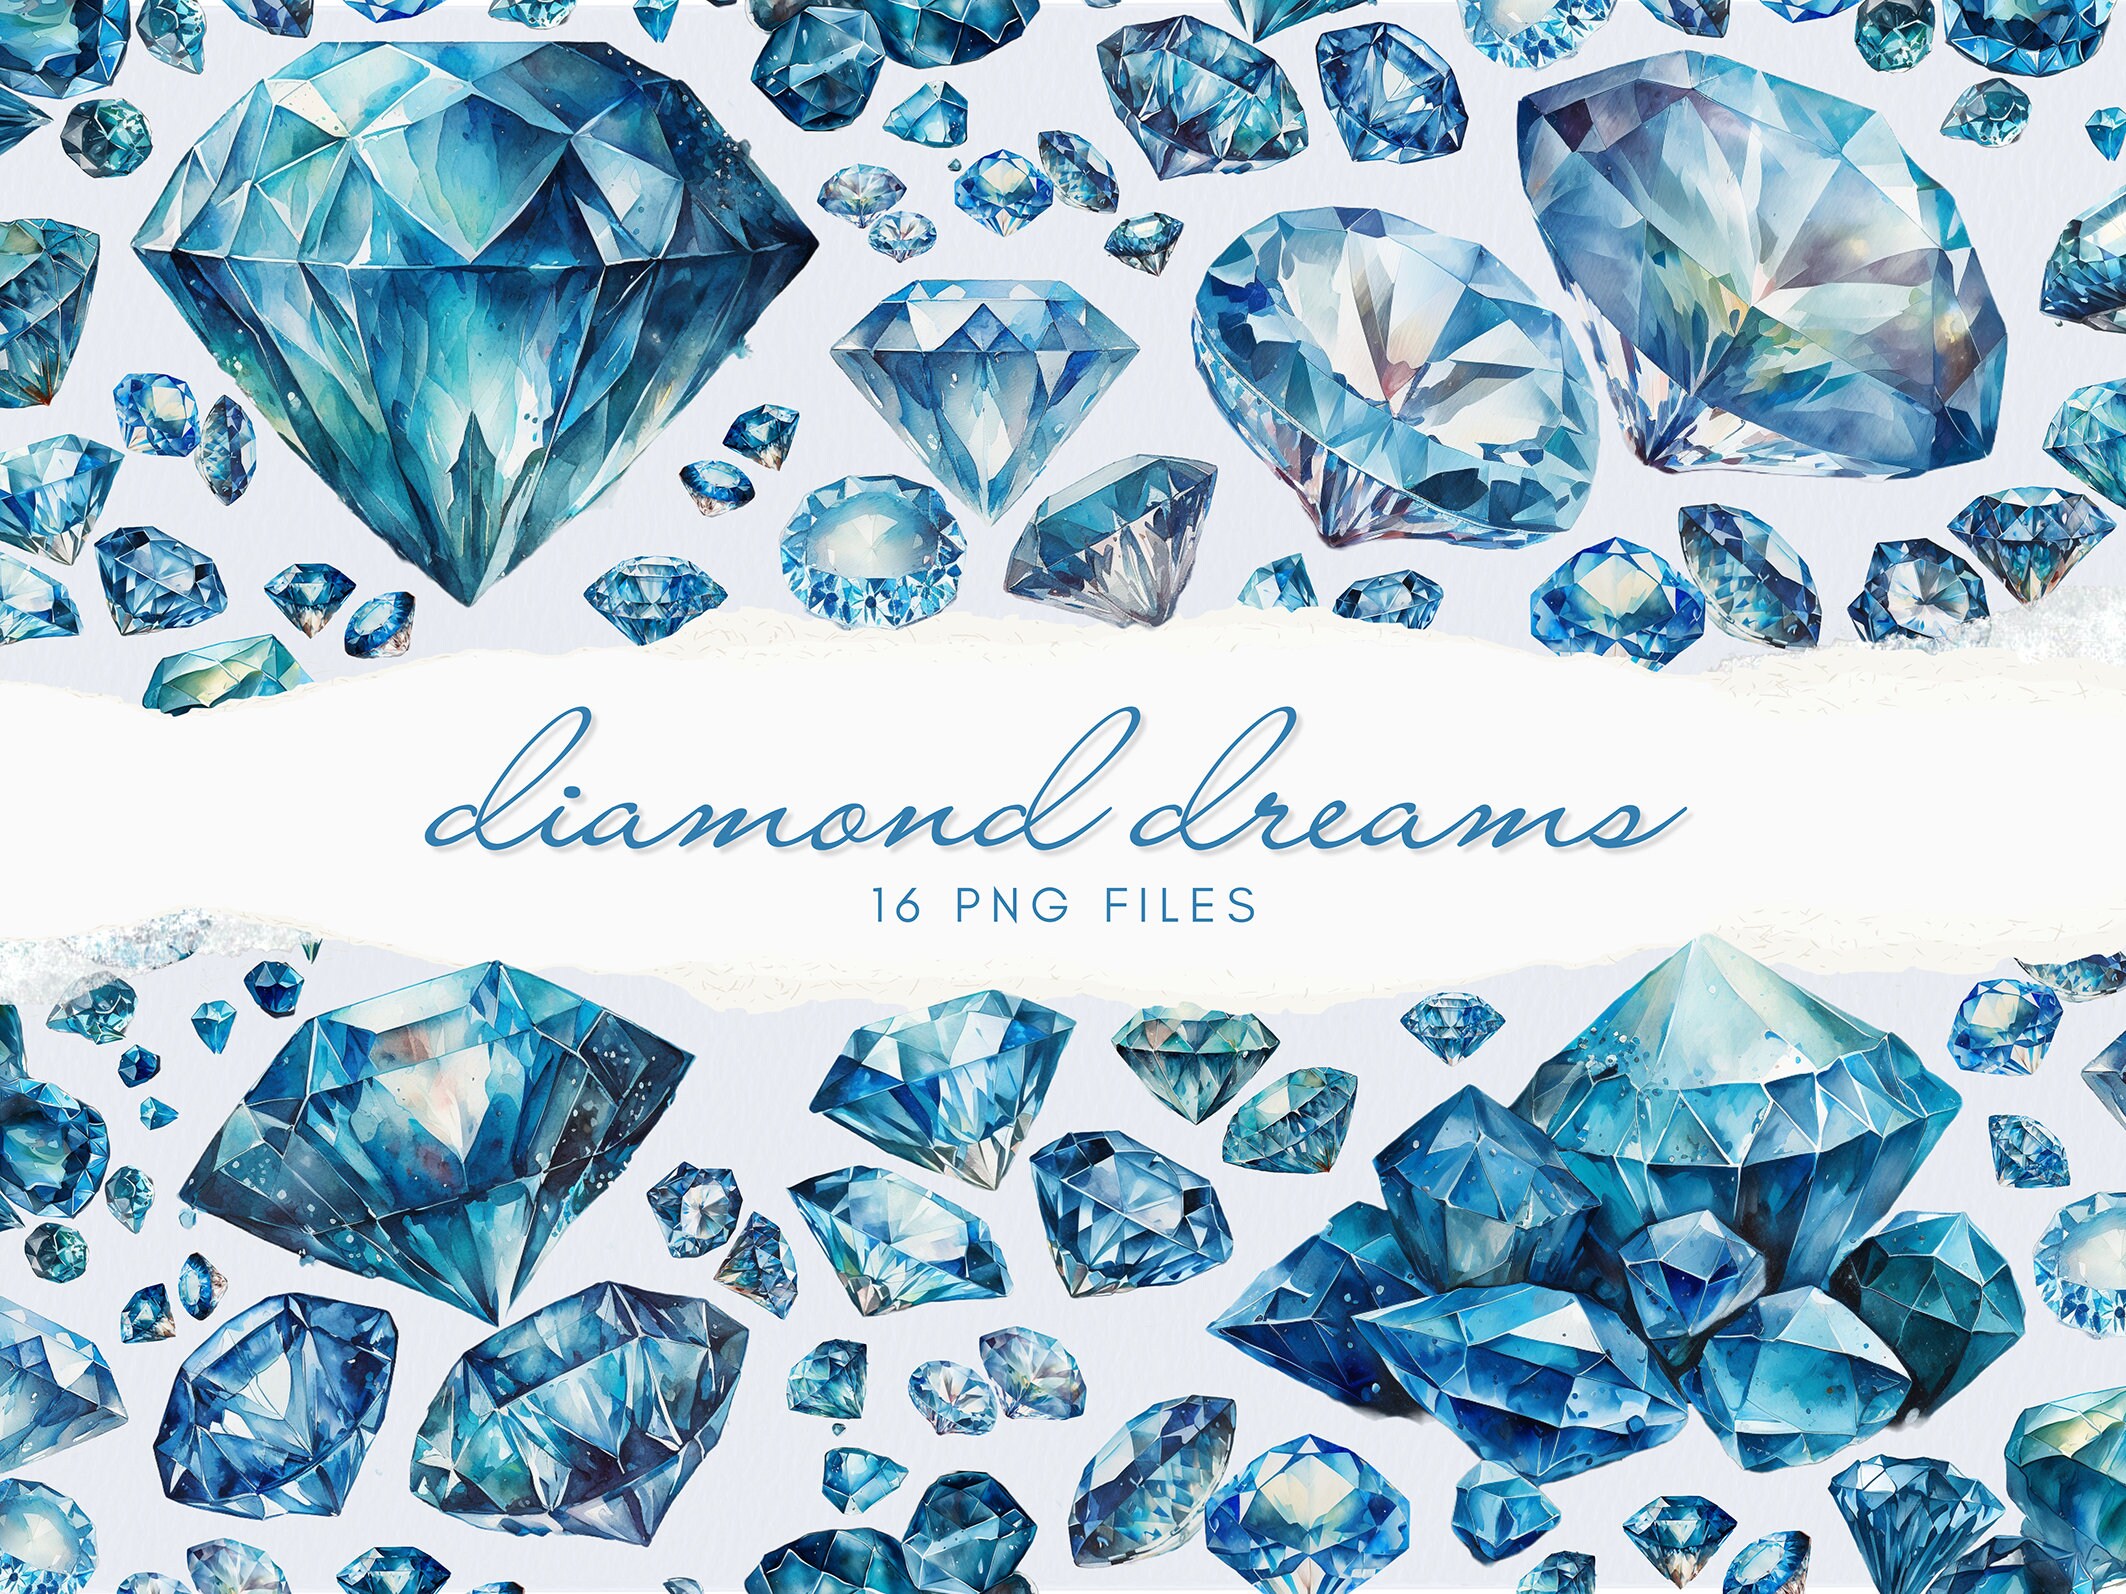 DIAMOND DOTZ Greeting Card dreams Come True 5D Diamond Painting